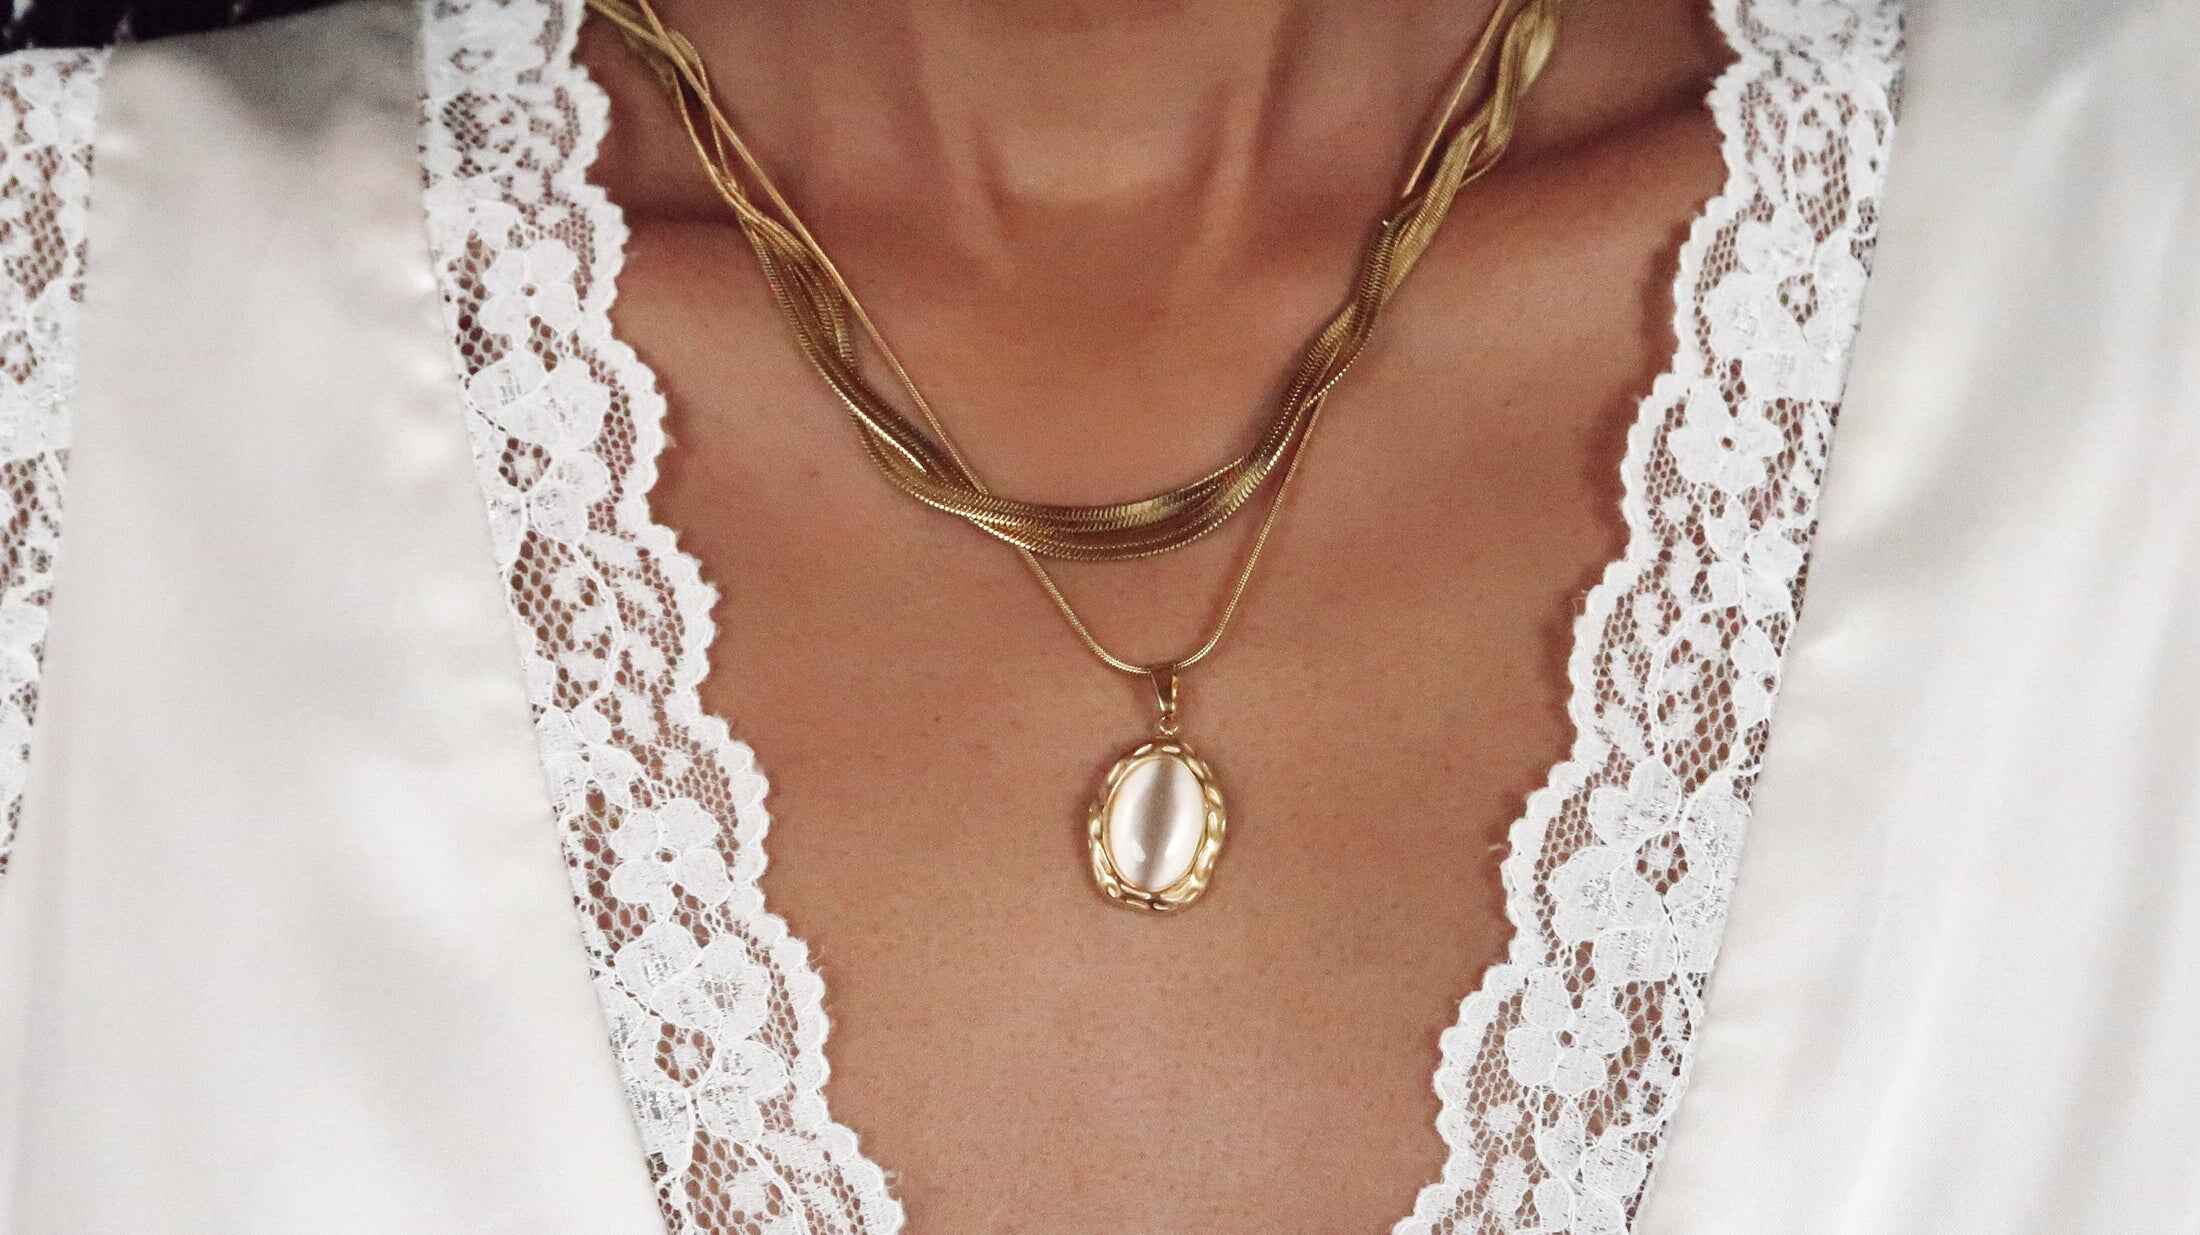 Necklaces - Mixed Metals